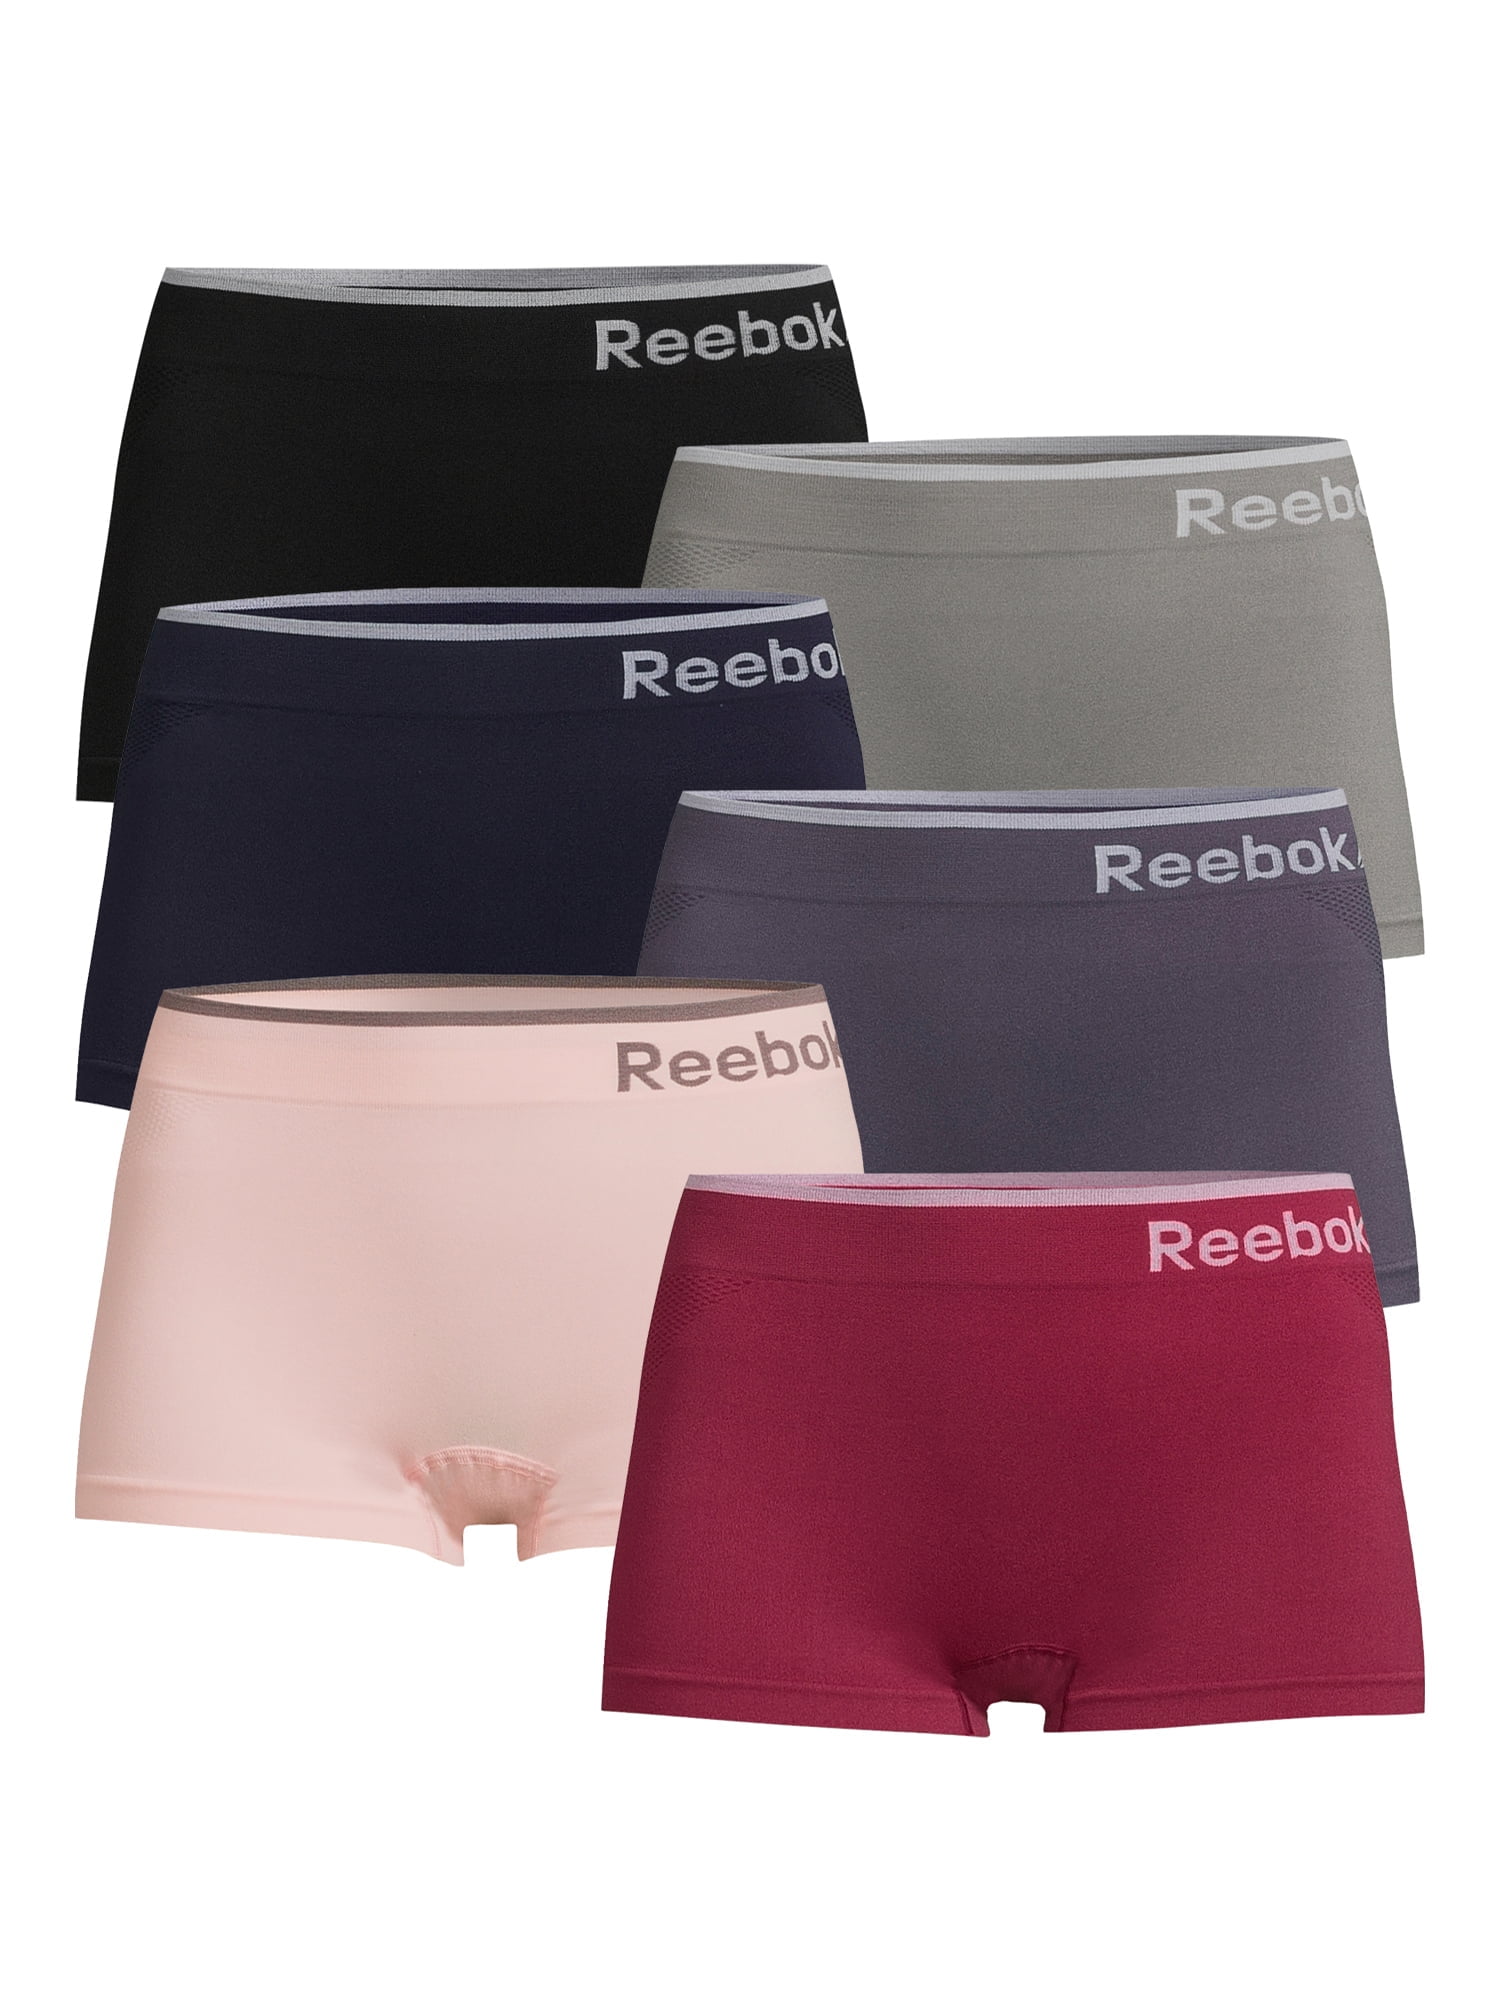 Reebok #11161 NEW Women's Performance Training 4 Seamless Boyshort Underwear